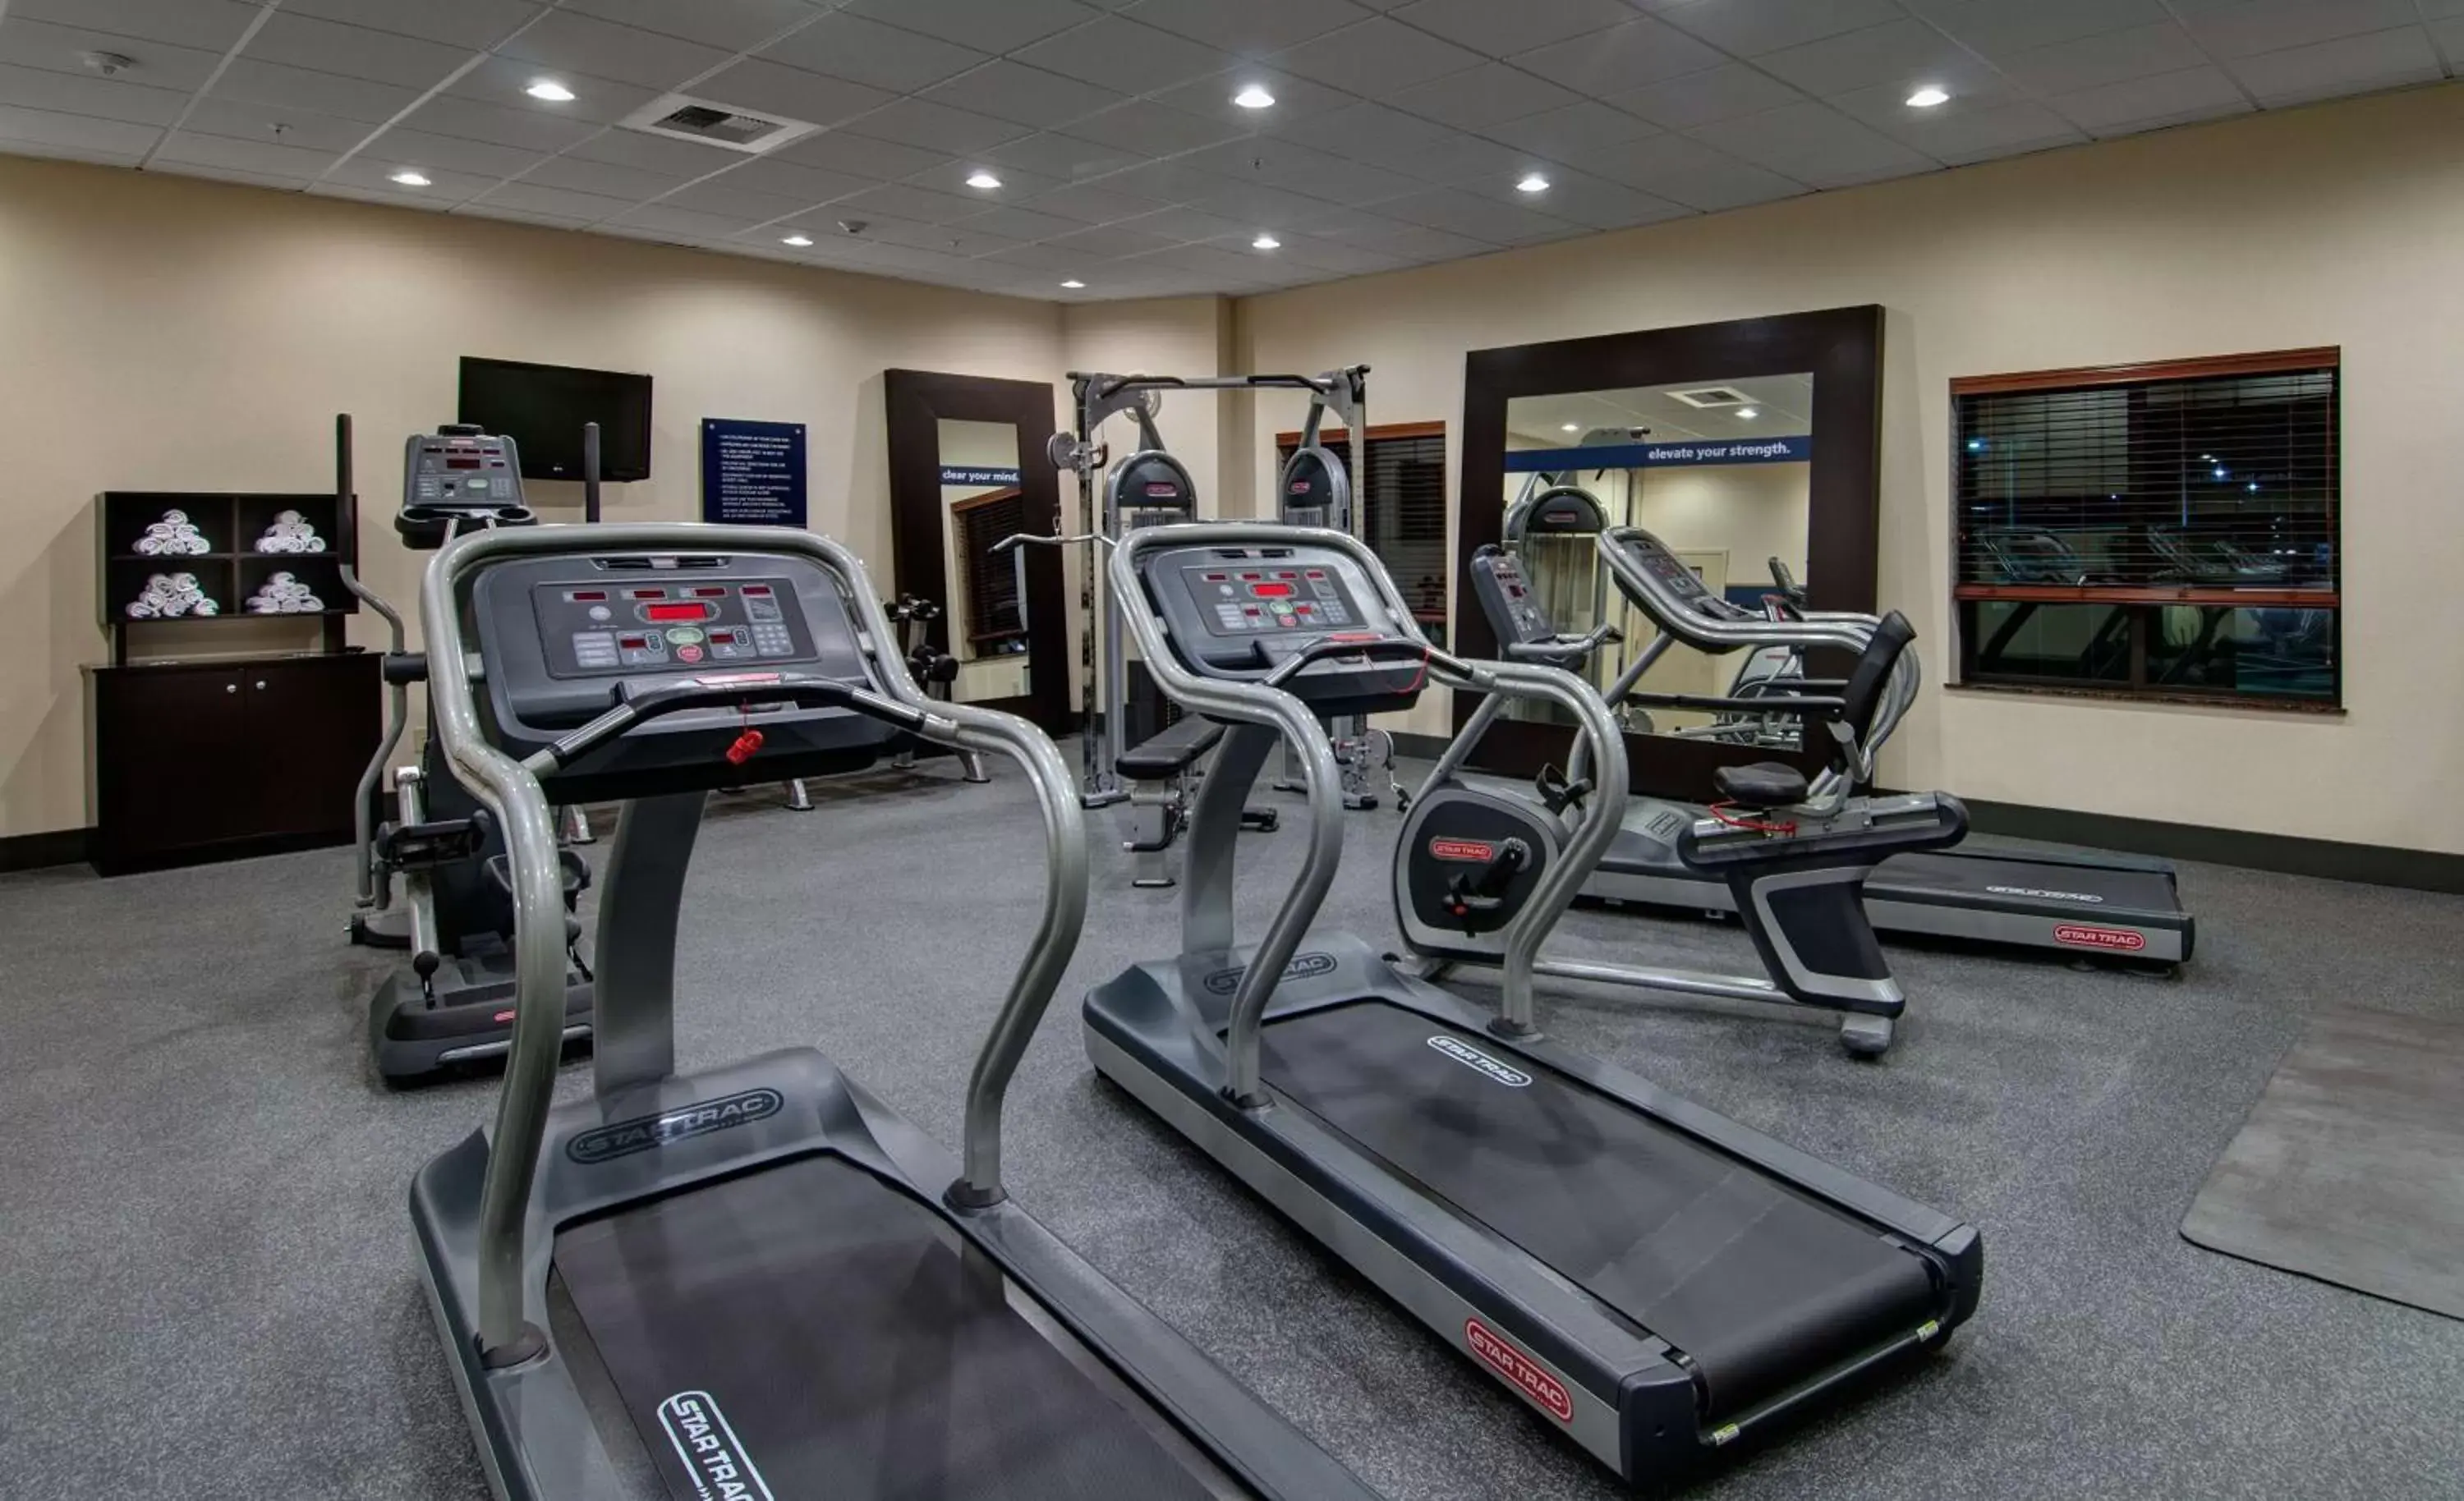 Fitness centre/facilities, Fitness Center/Facilities in Hampton Inn & Suites Astoria